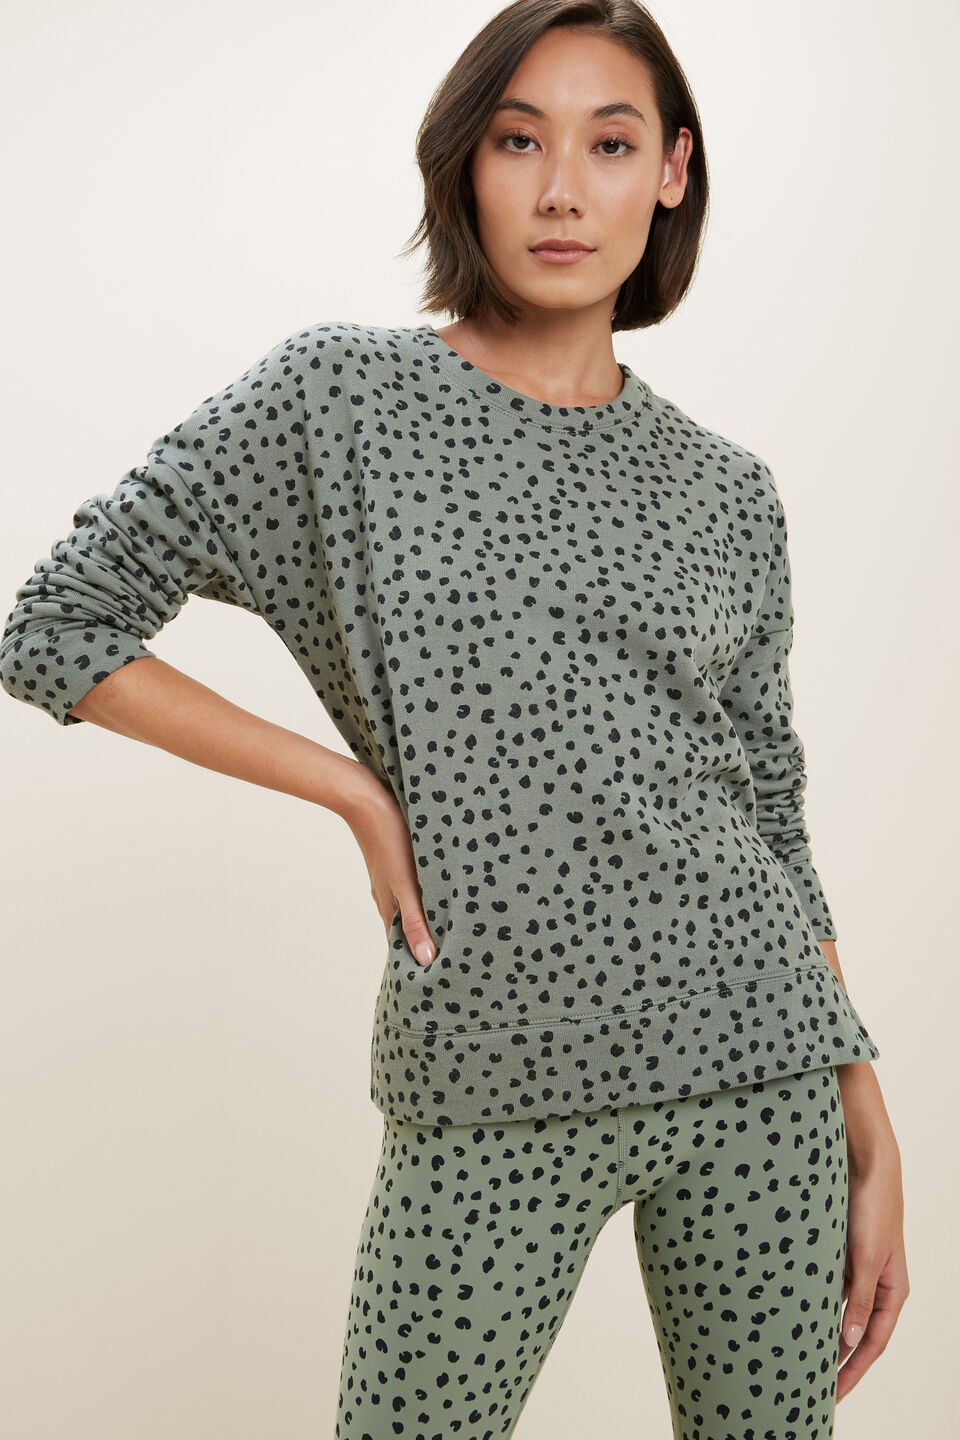 Ocelot Sweater  Multi Spot  hi-res